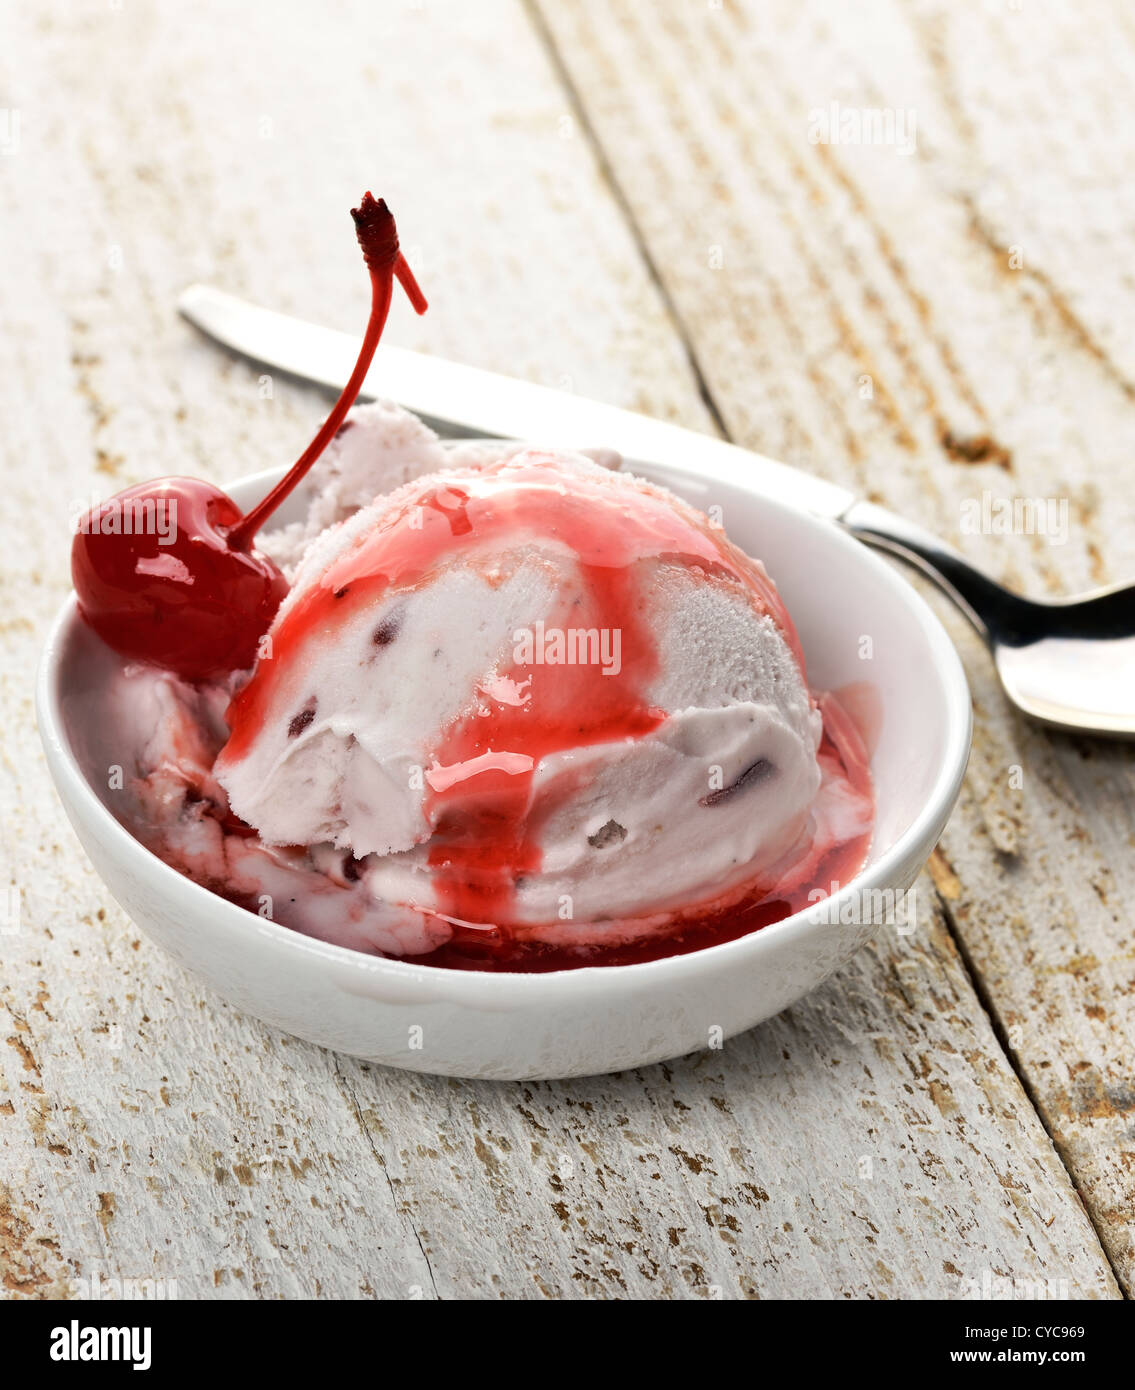 Vanilla And Cherry Ice Cream On A Wooden Table Stock Photo